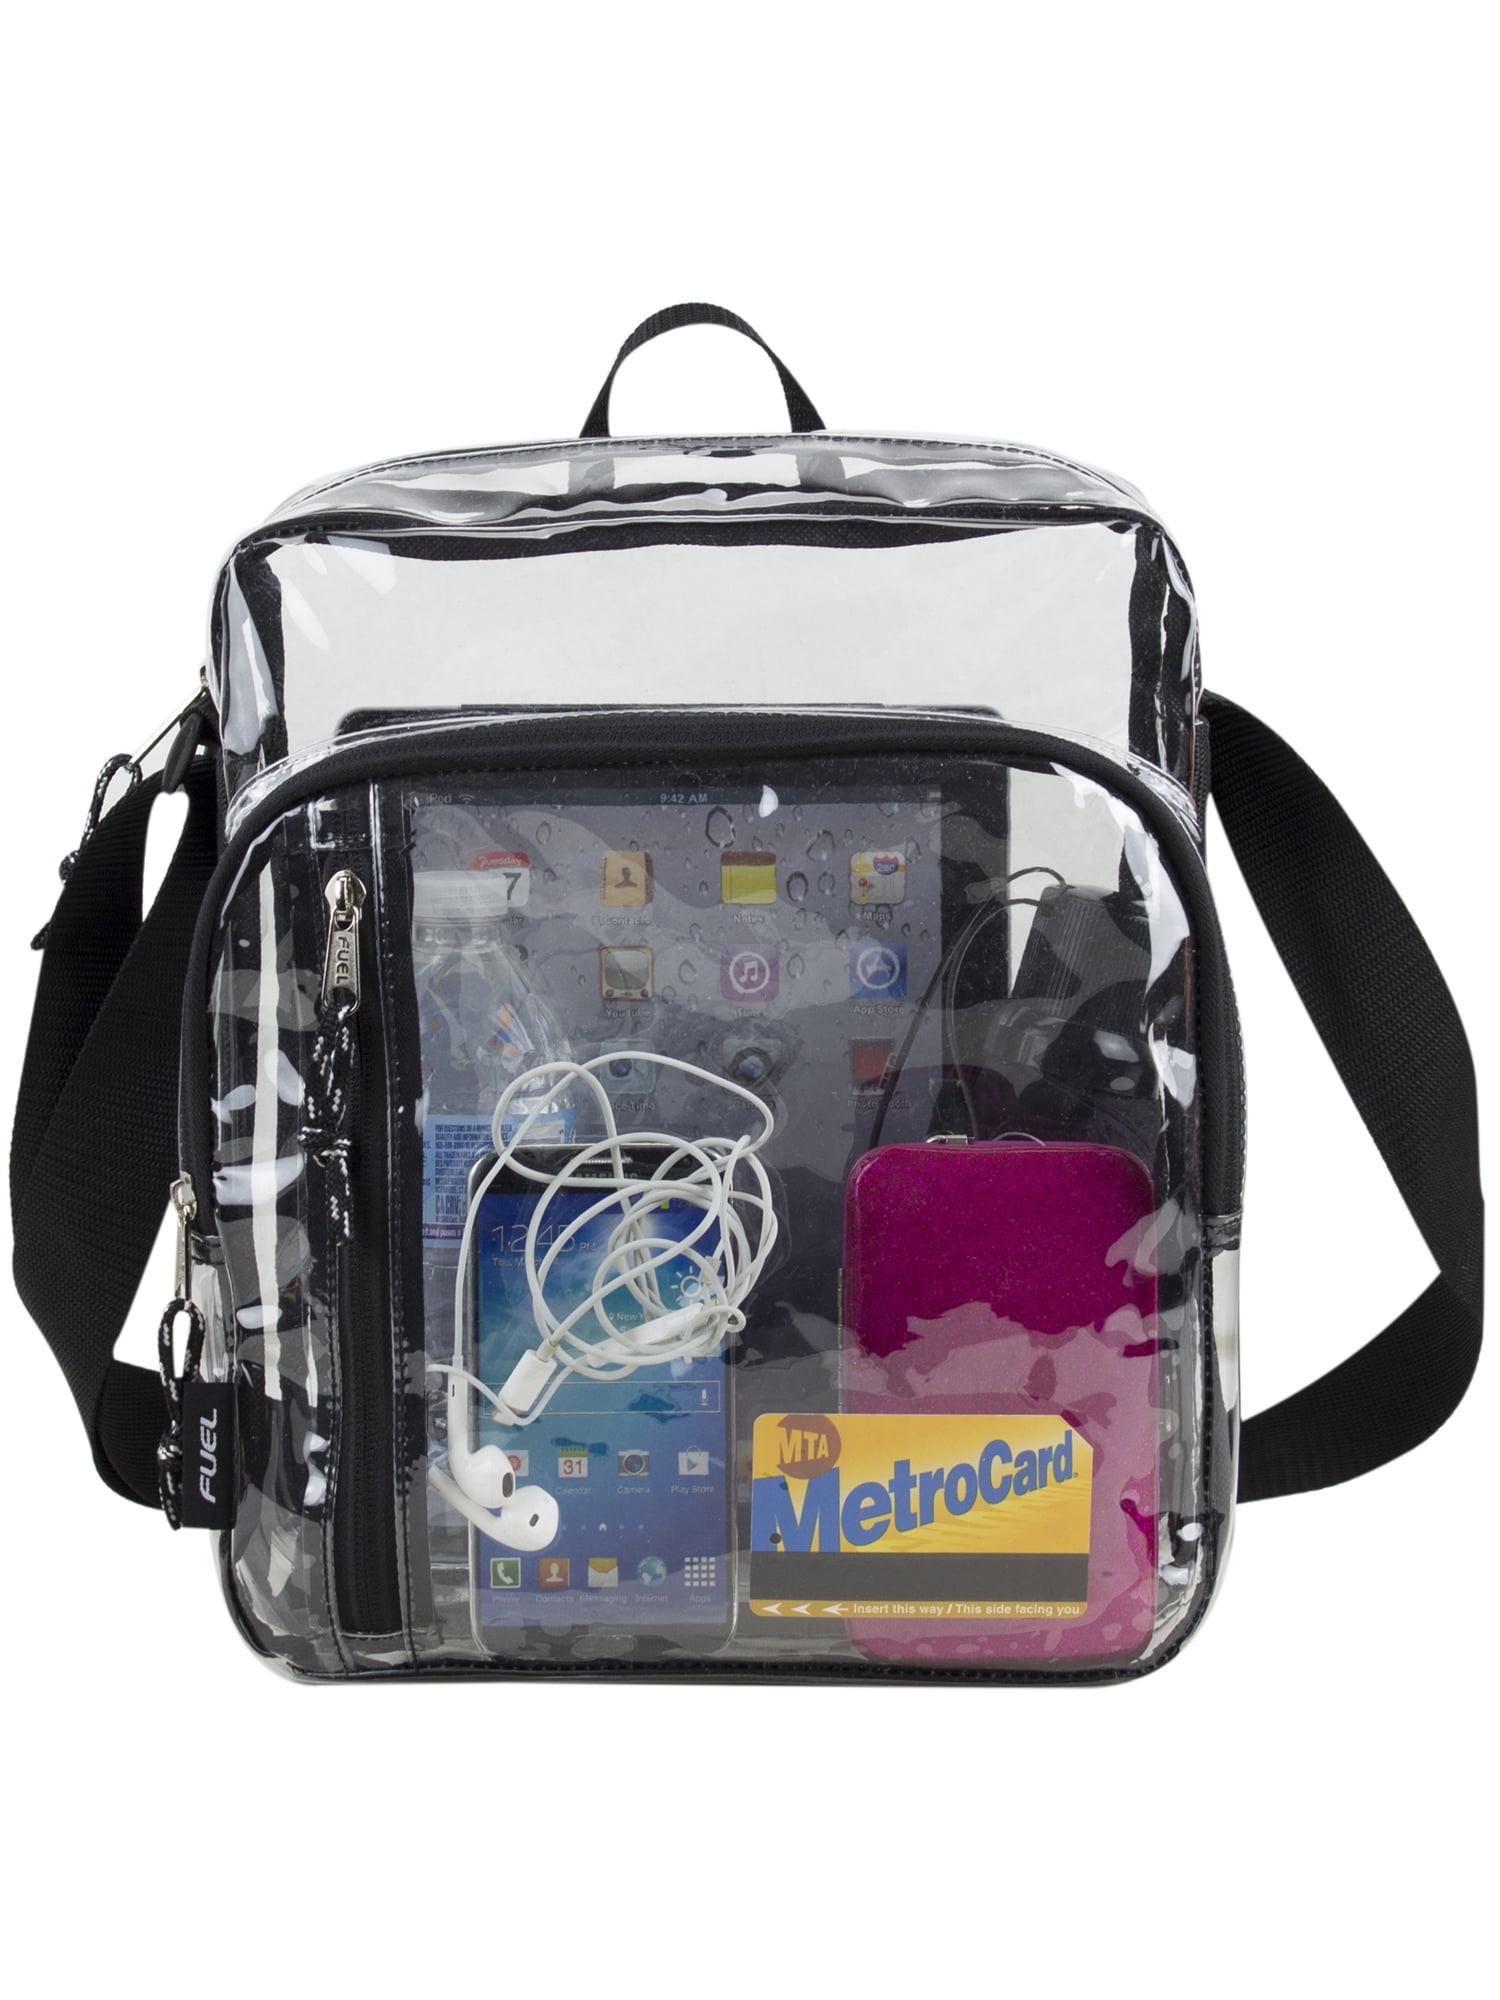 Cartoon Retractable Clip ID/Opal/ Myki Metro Card Holder school bag Luggage  Tag | eBay